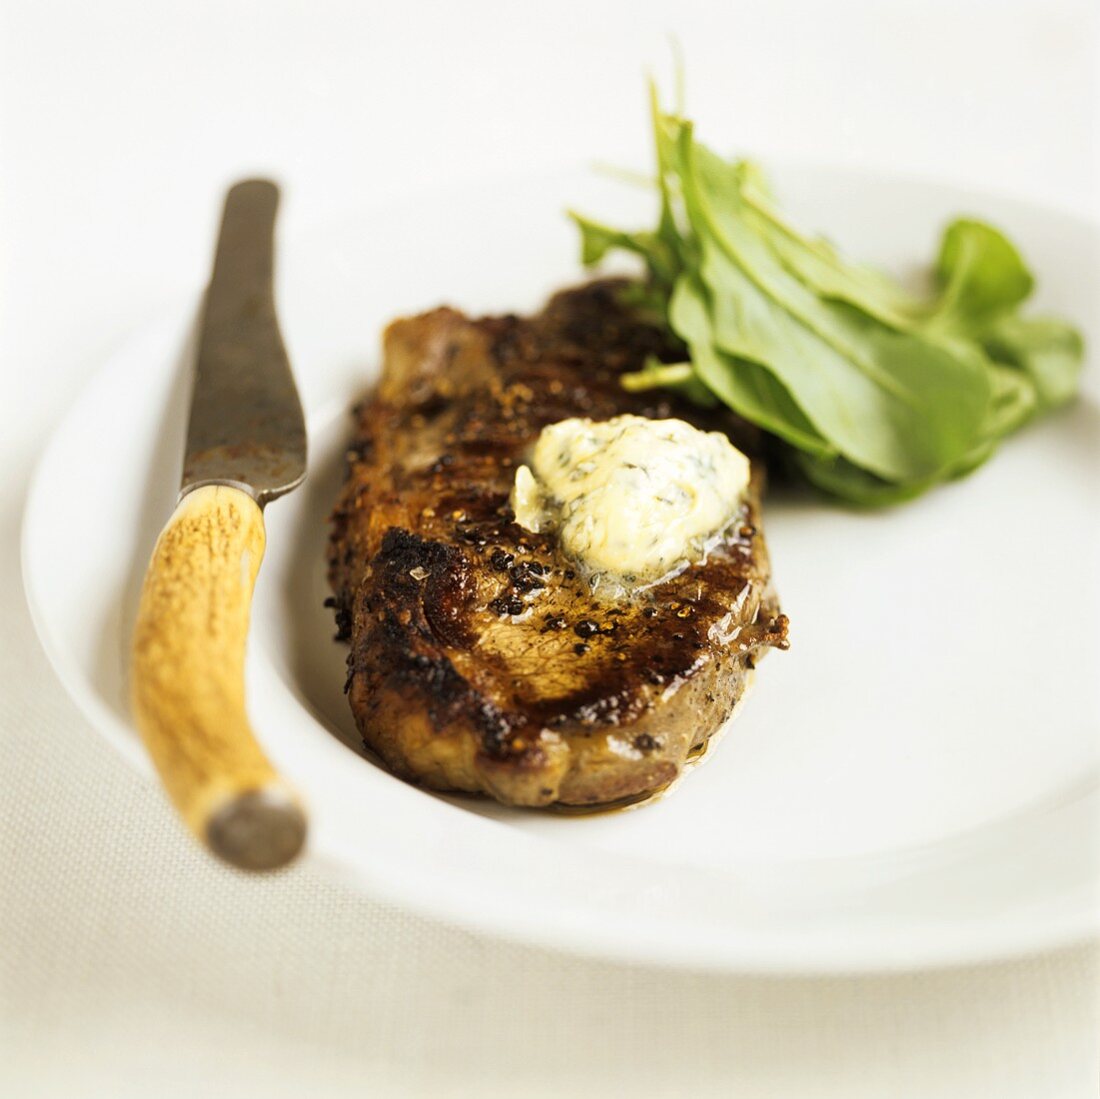 Rump steak with herb butter